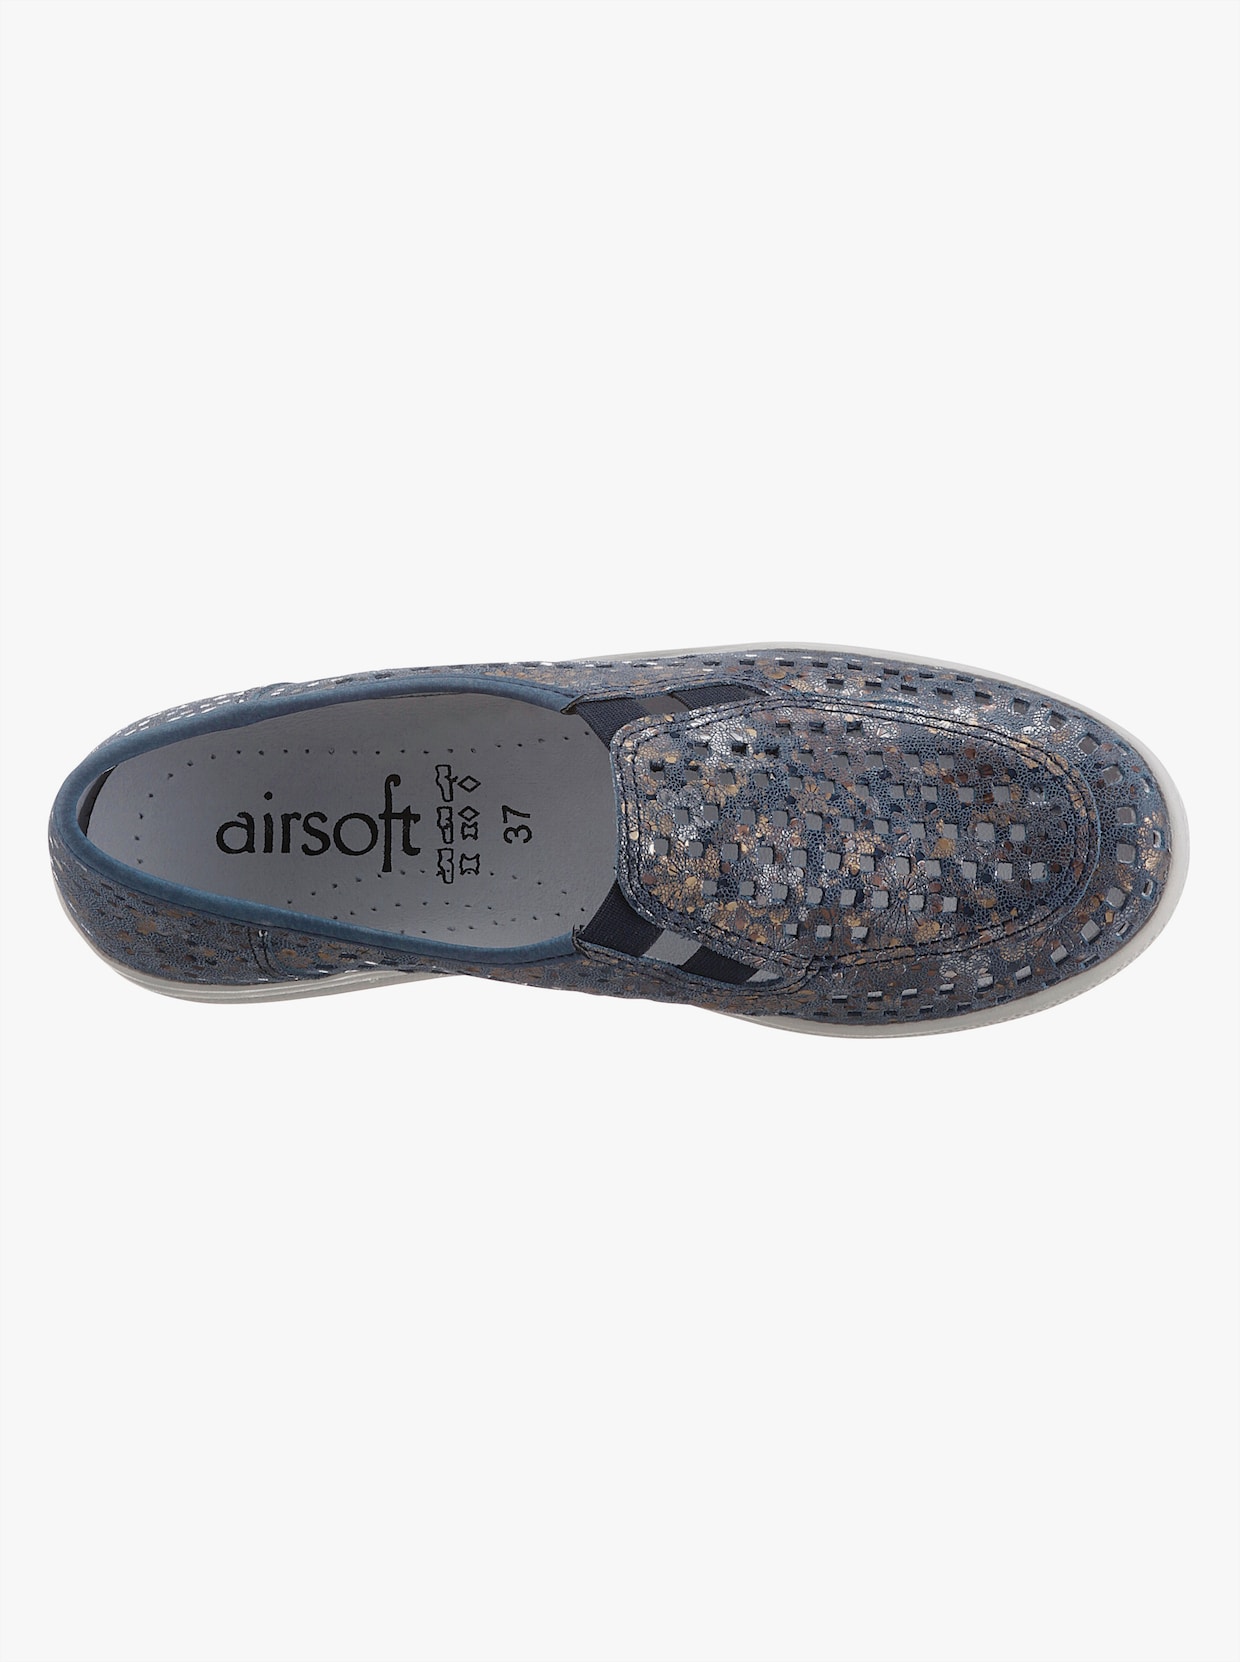 airsoft comfort+ Slipery - Námorníctvo ranu